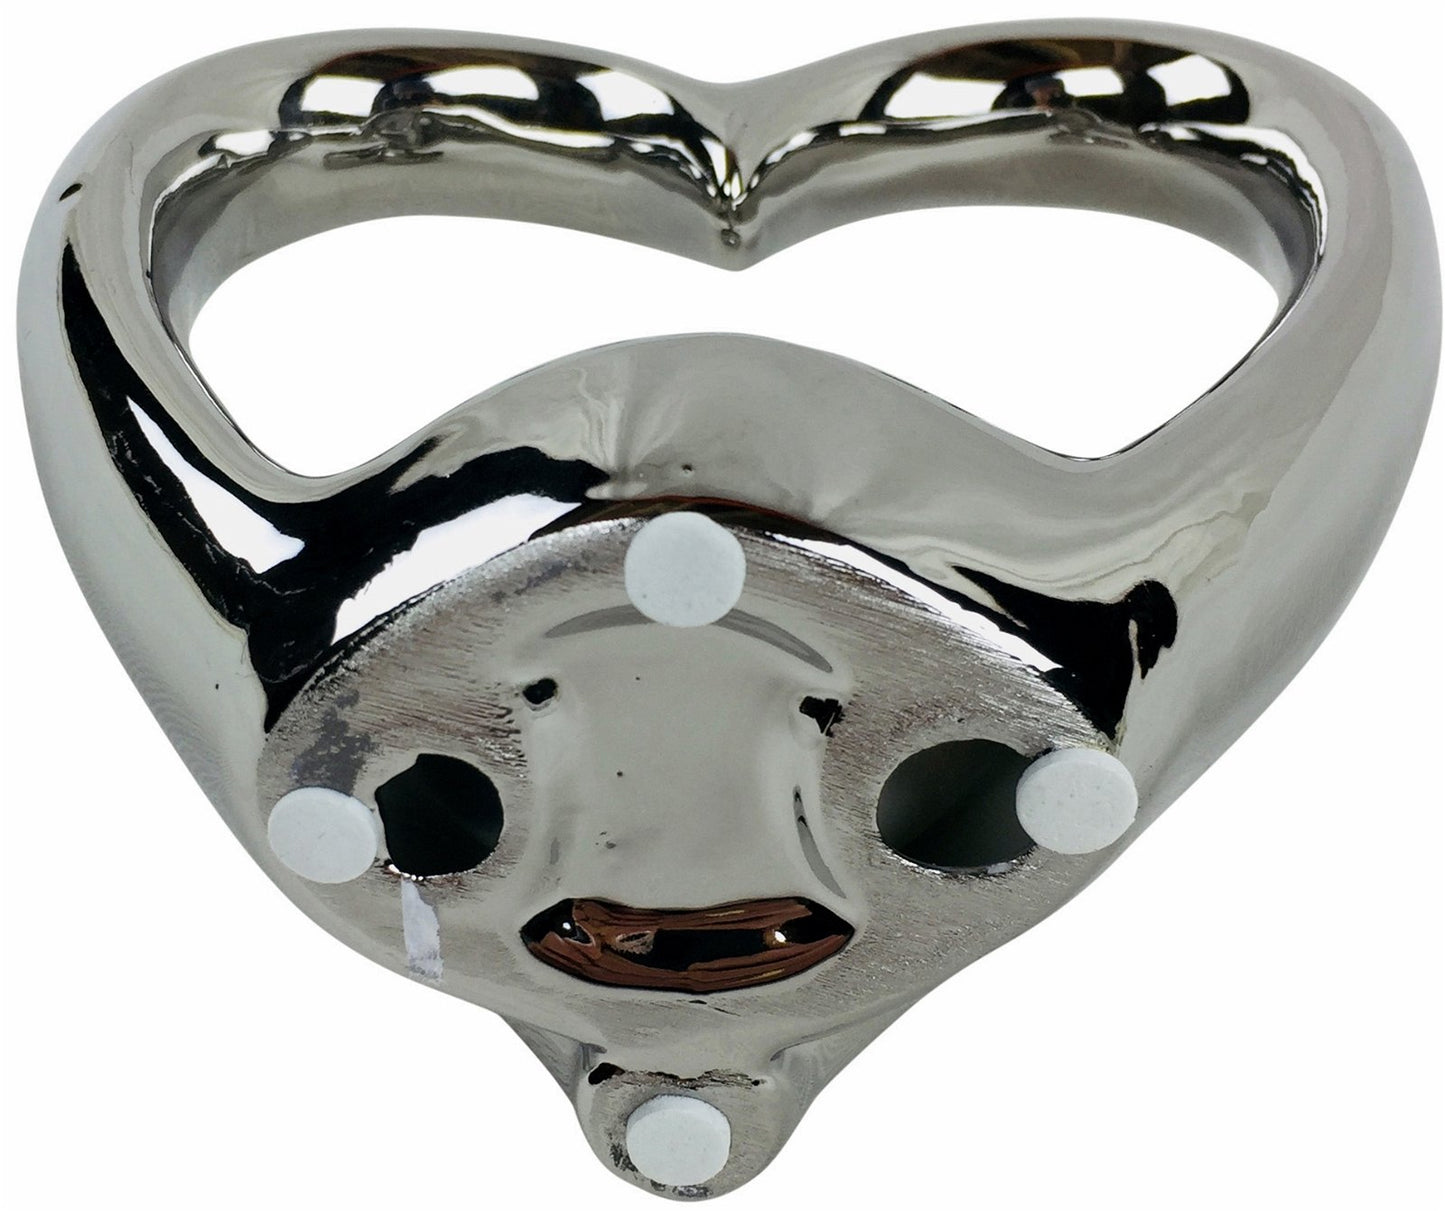 Silver Double Heart Tealight Holder